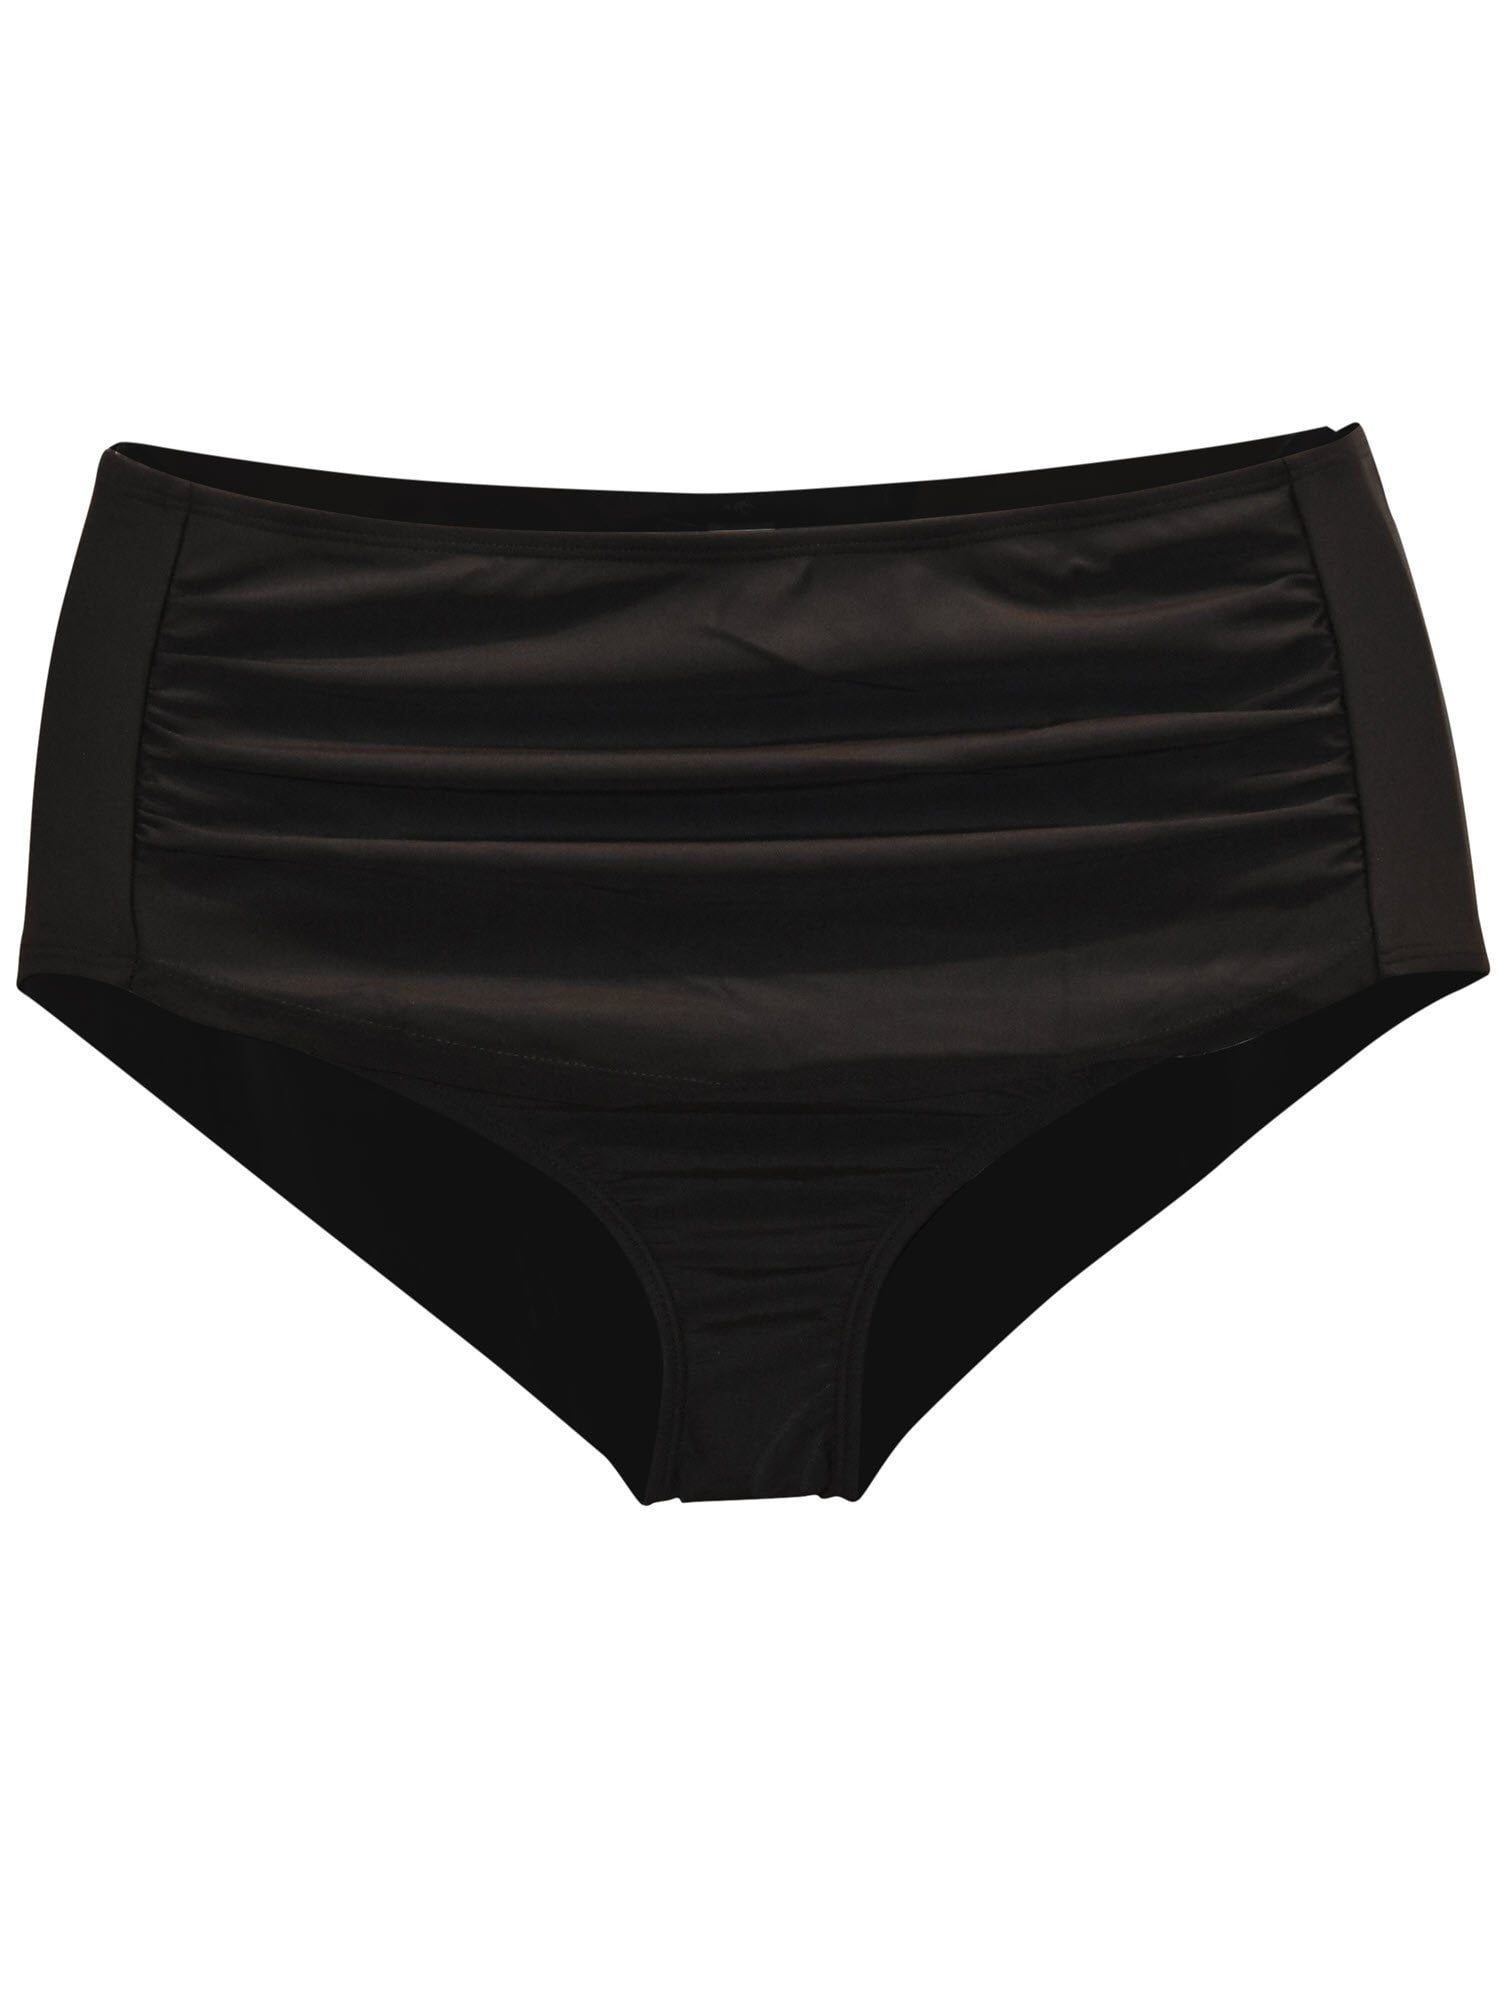 Heat High Waisted Bikini Swimsuit Bottoms Separates - Walmart.com